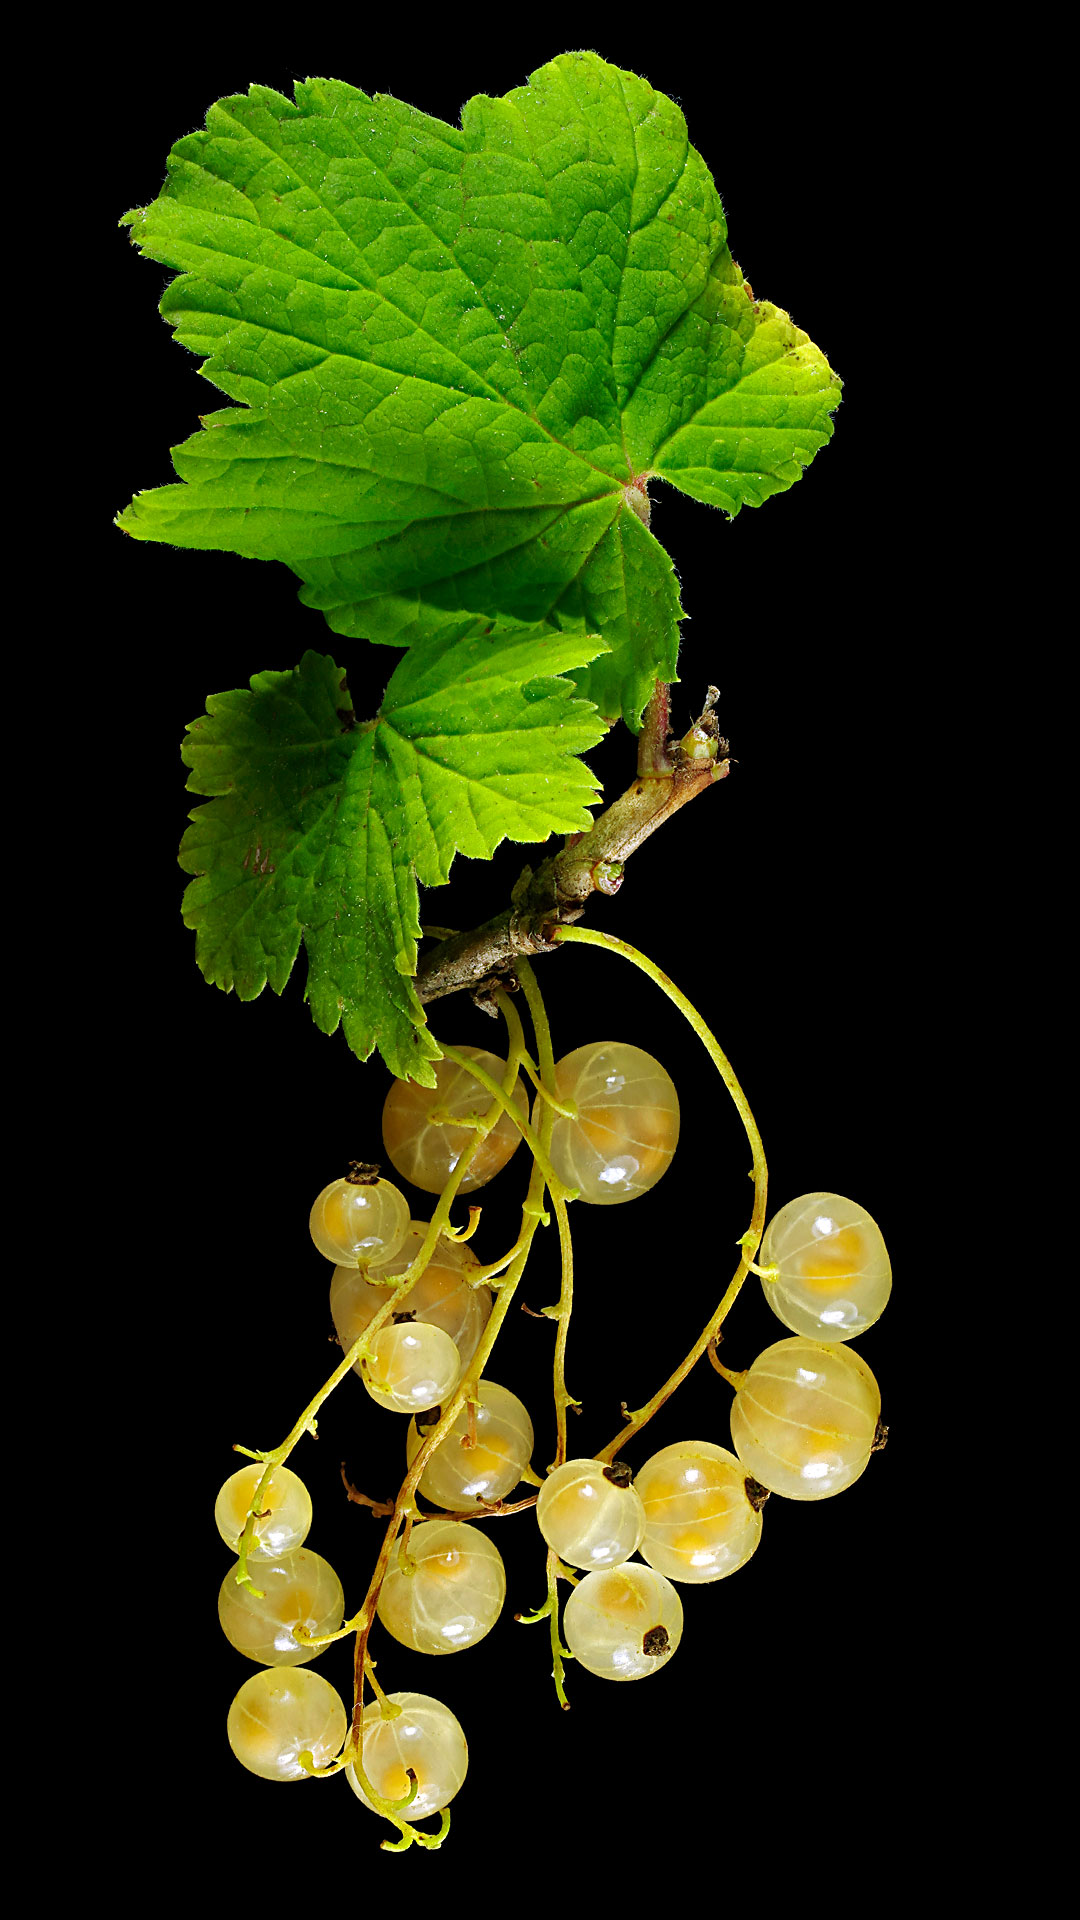 White currant: Ribes rubrum var. alba